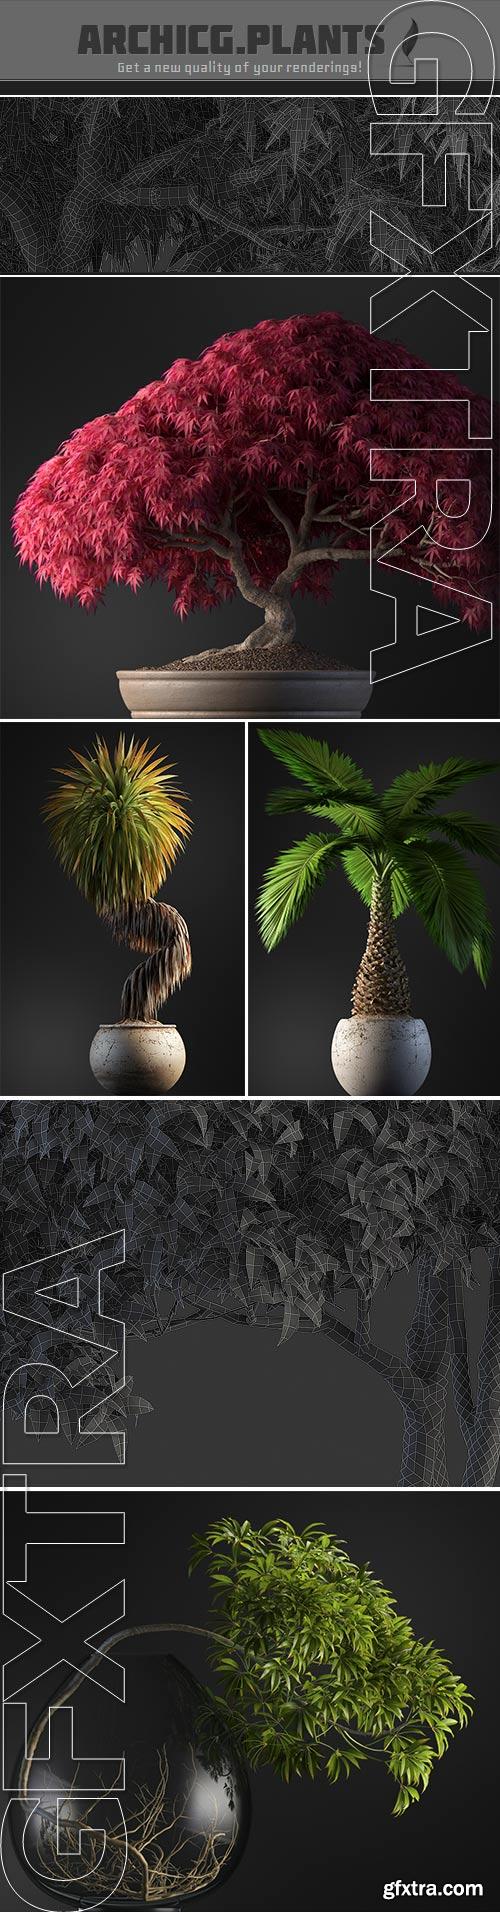 ArchiCG.Plants - Bonsai 4interior v.1